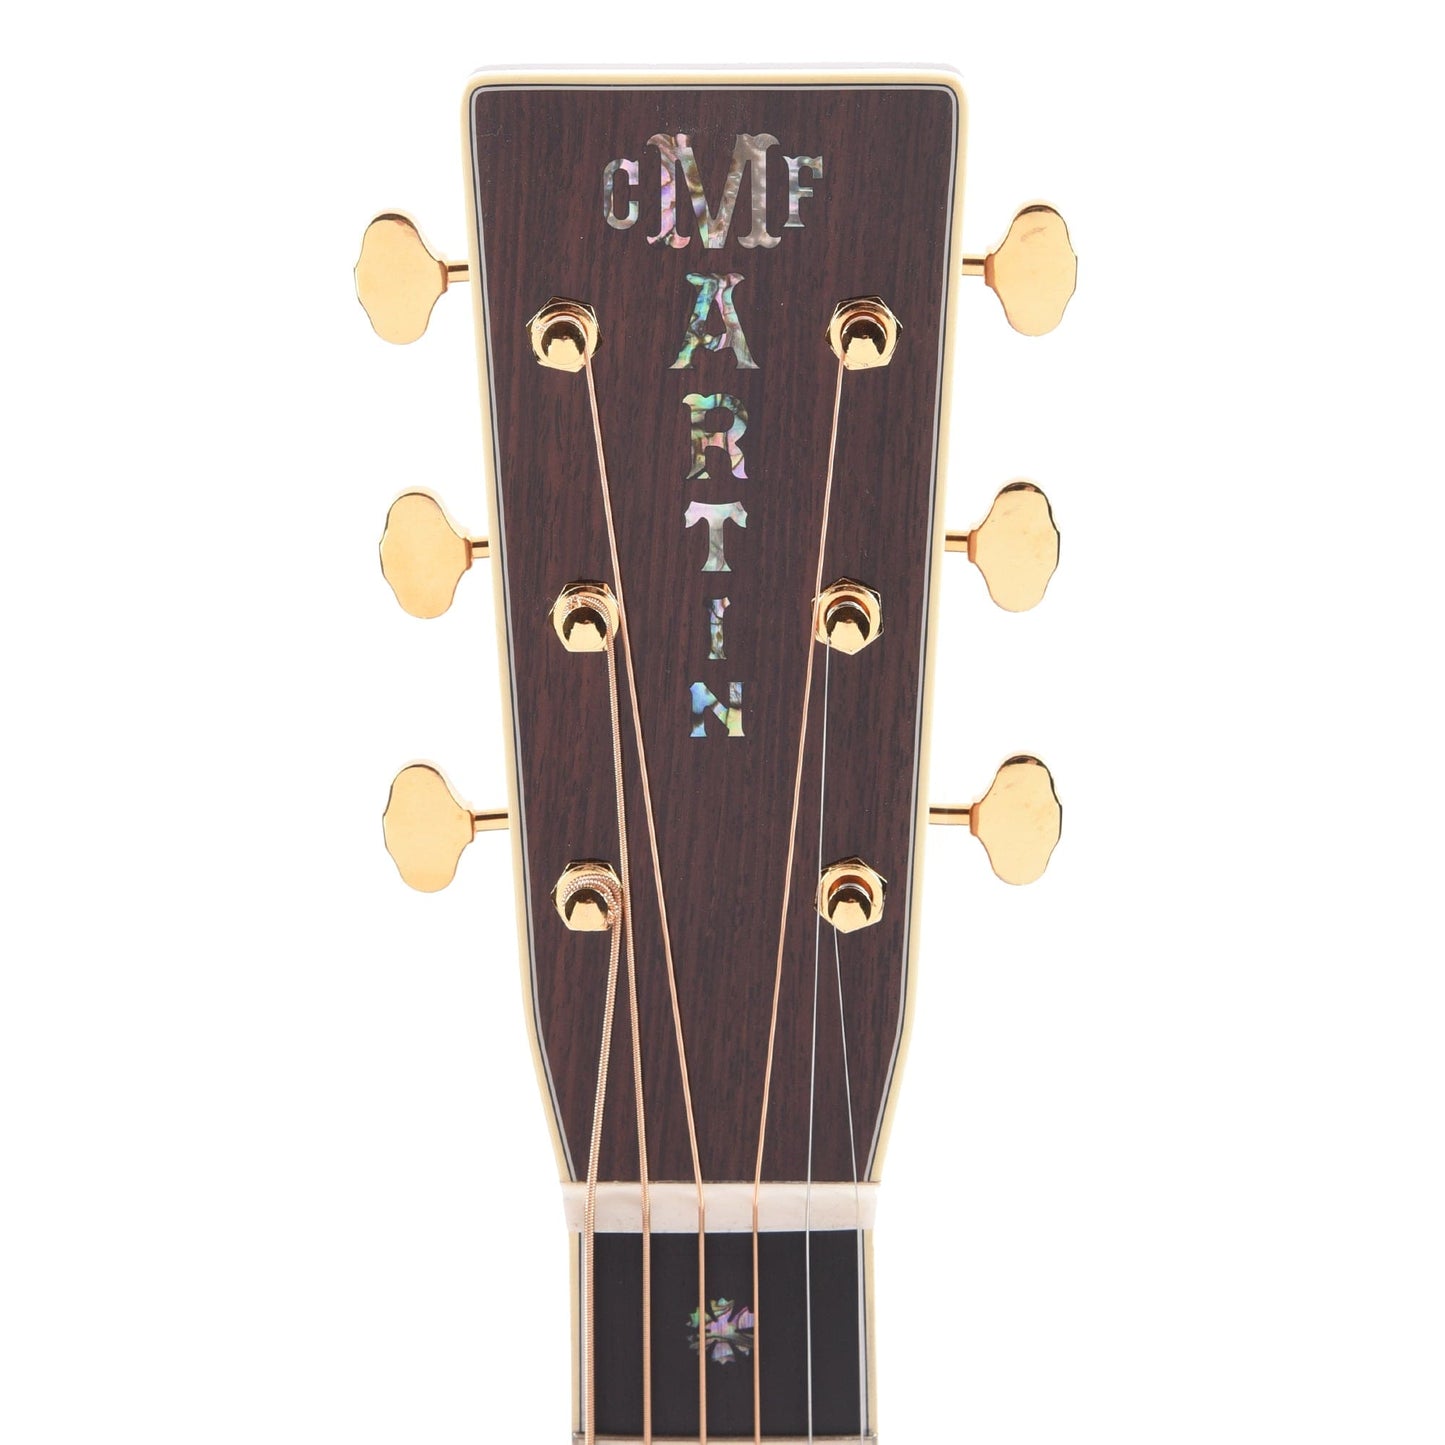 Martin OM-42 Natural Acoustic Guitars / OM and Auditorium